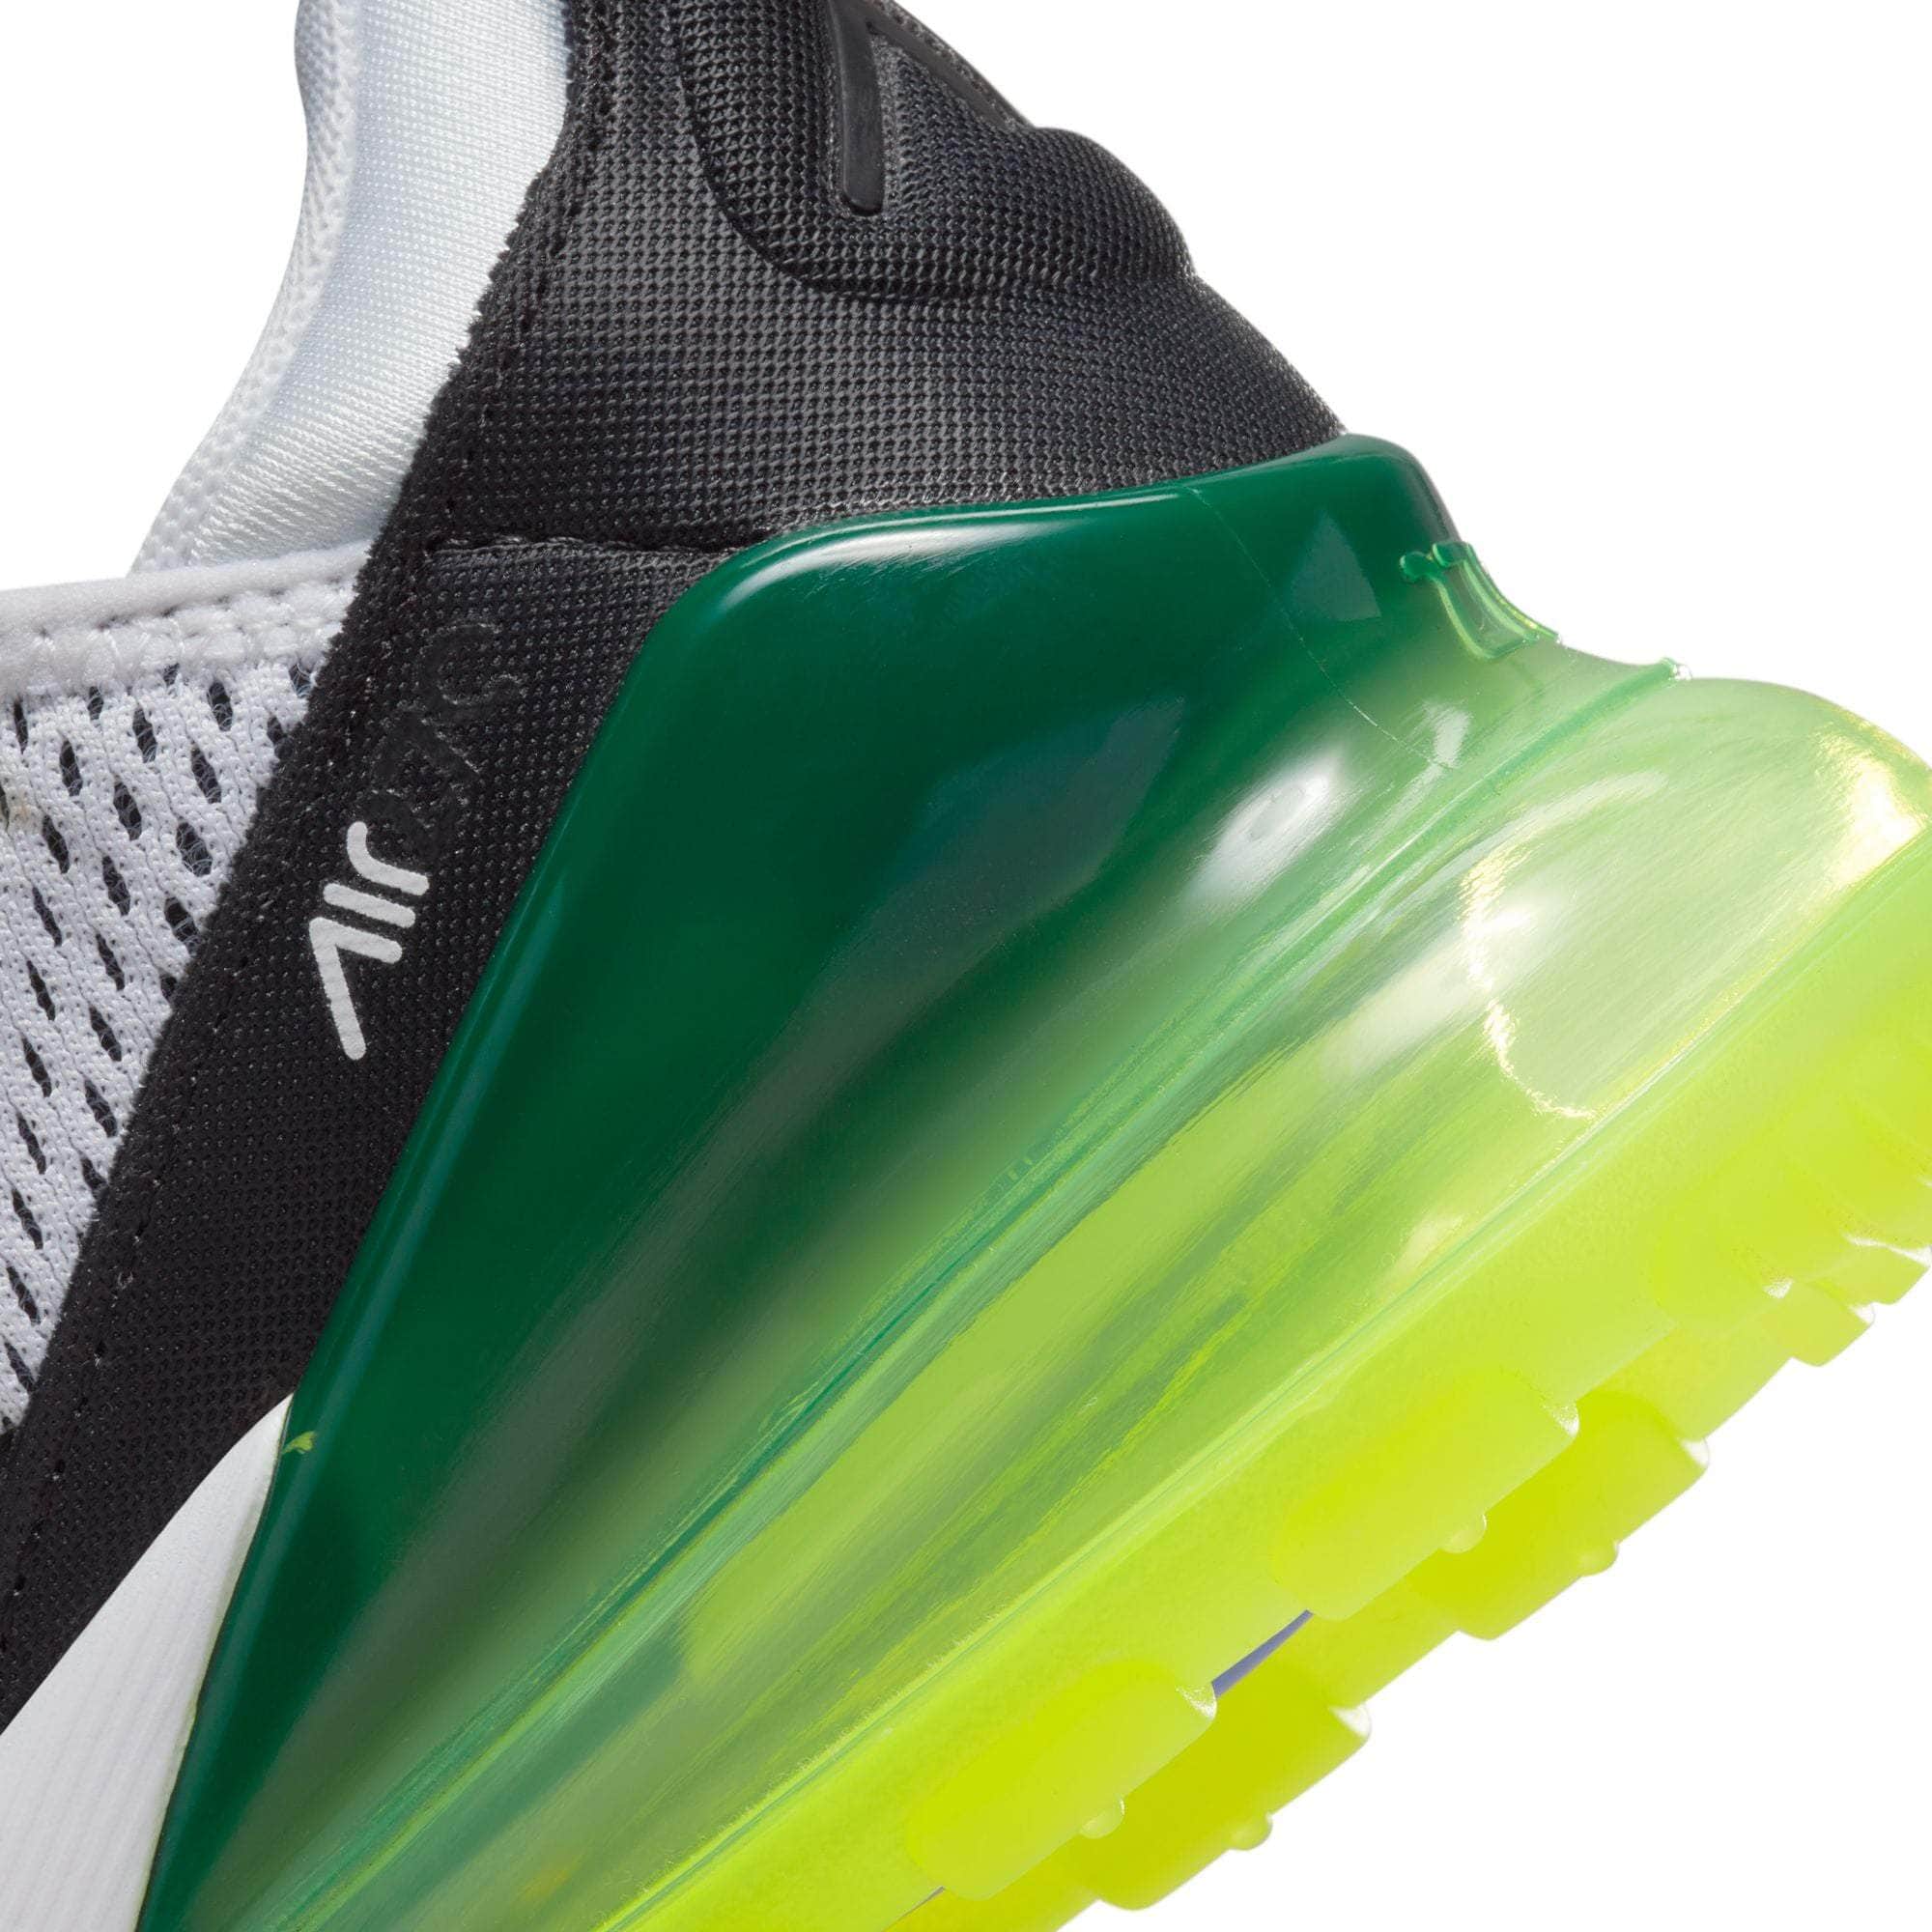 NIKE FOOTWEAR Nike Air Max 270 - Women's